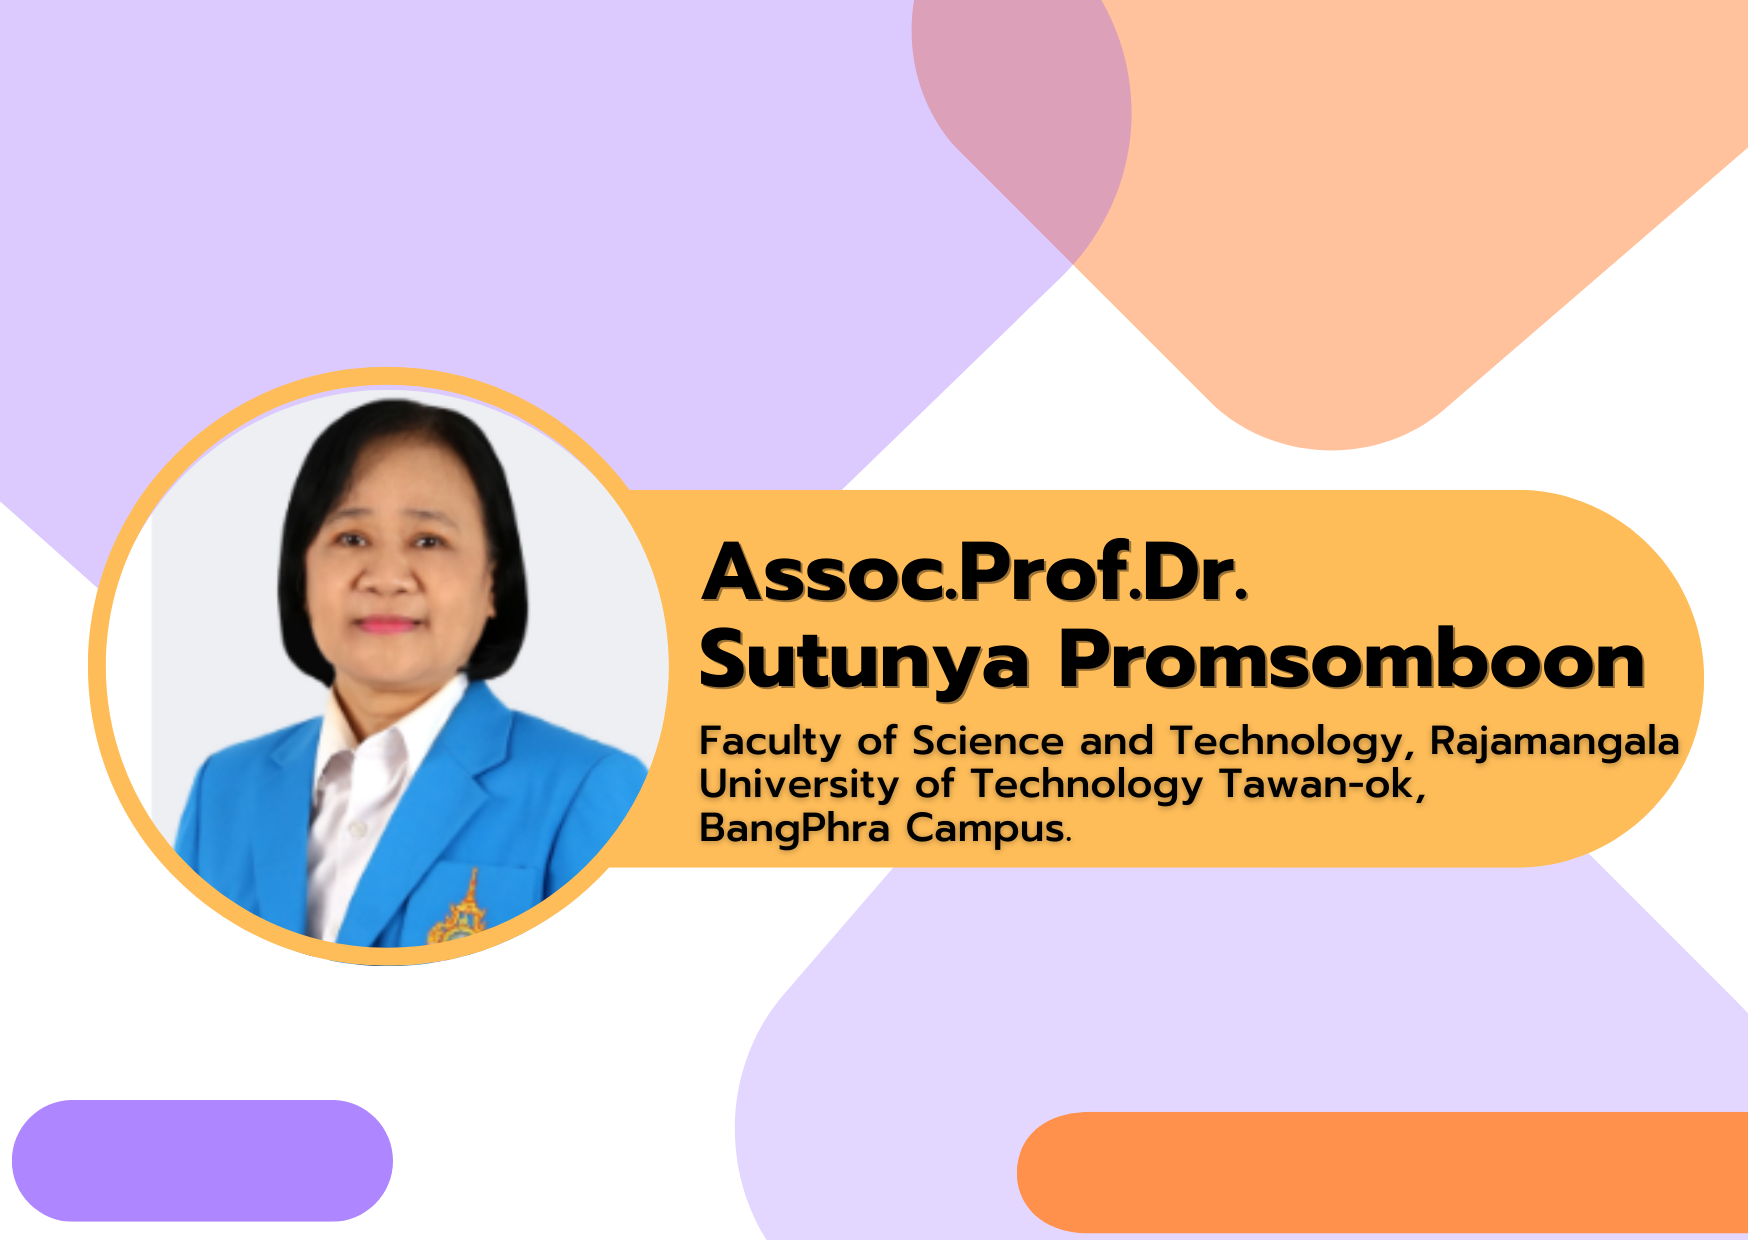 Assoc.Prof.Dr. Sutunya Promsomboon